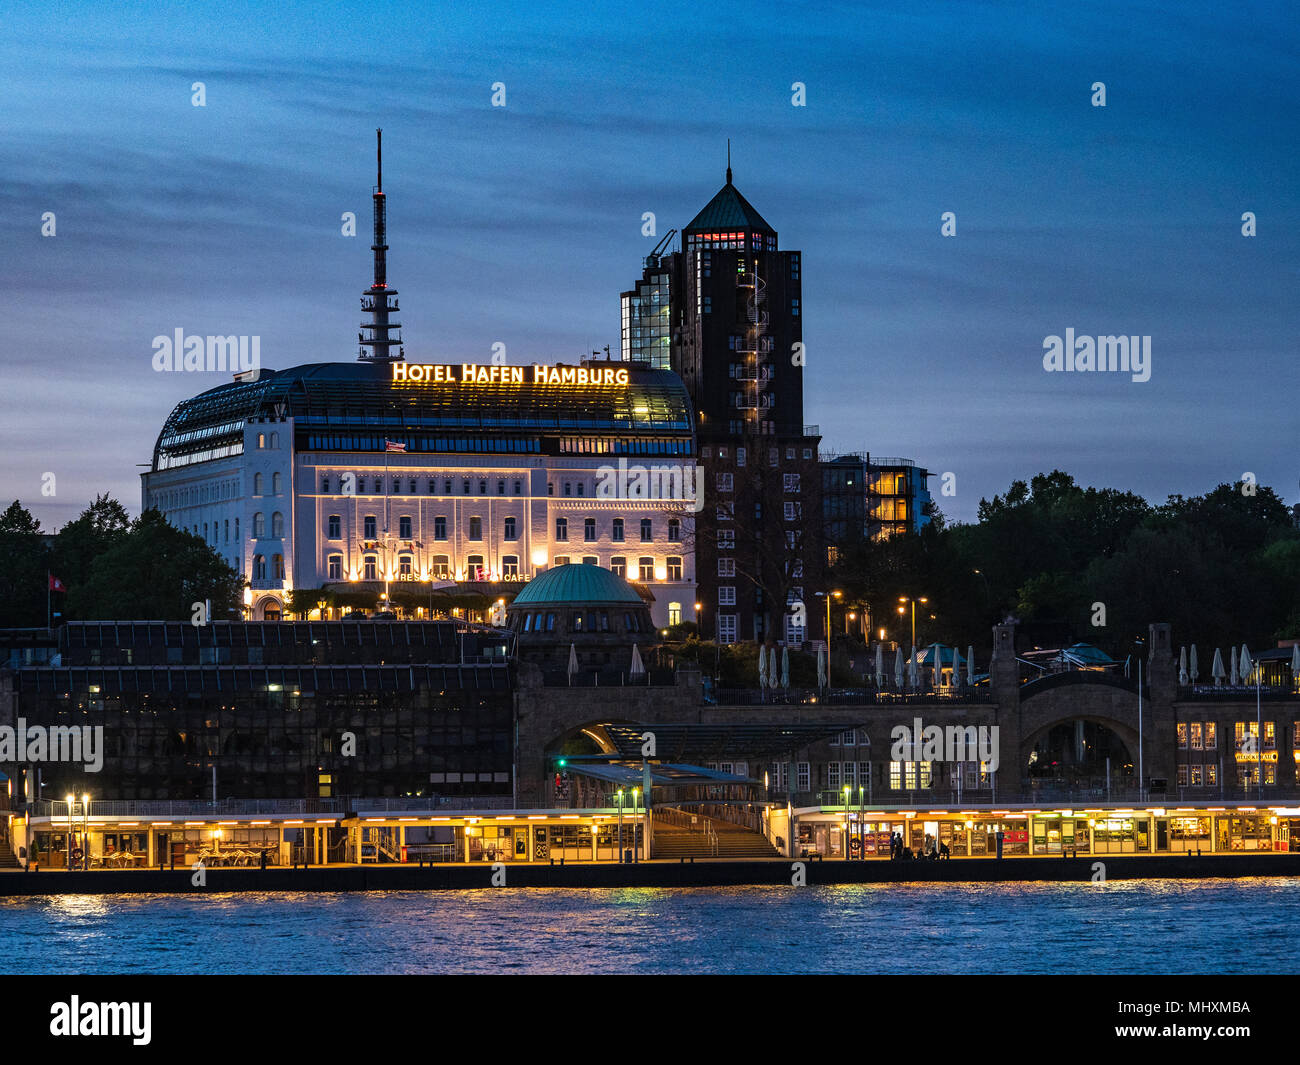 Hotel Hafen Hamburg & Landungsbrücken dock Hamburg - a 700 metri lungo la banchina galleggiante sul fiume Elba nel centro di Amburgo Foto Stock